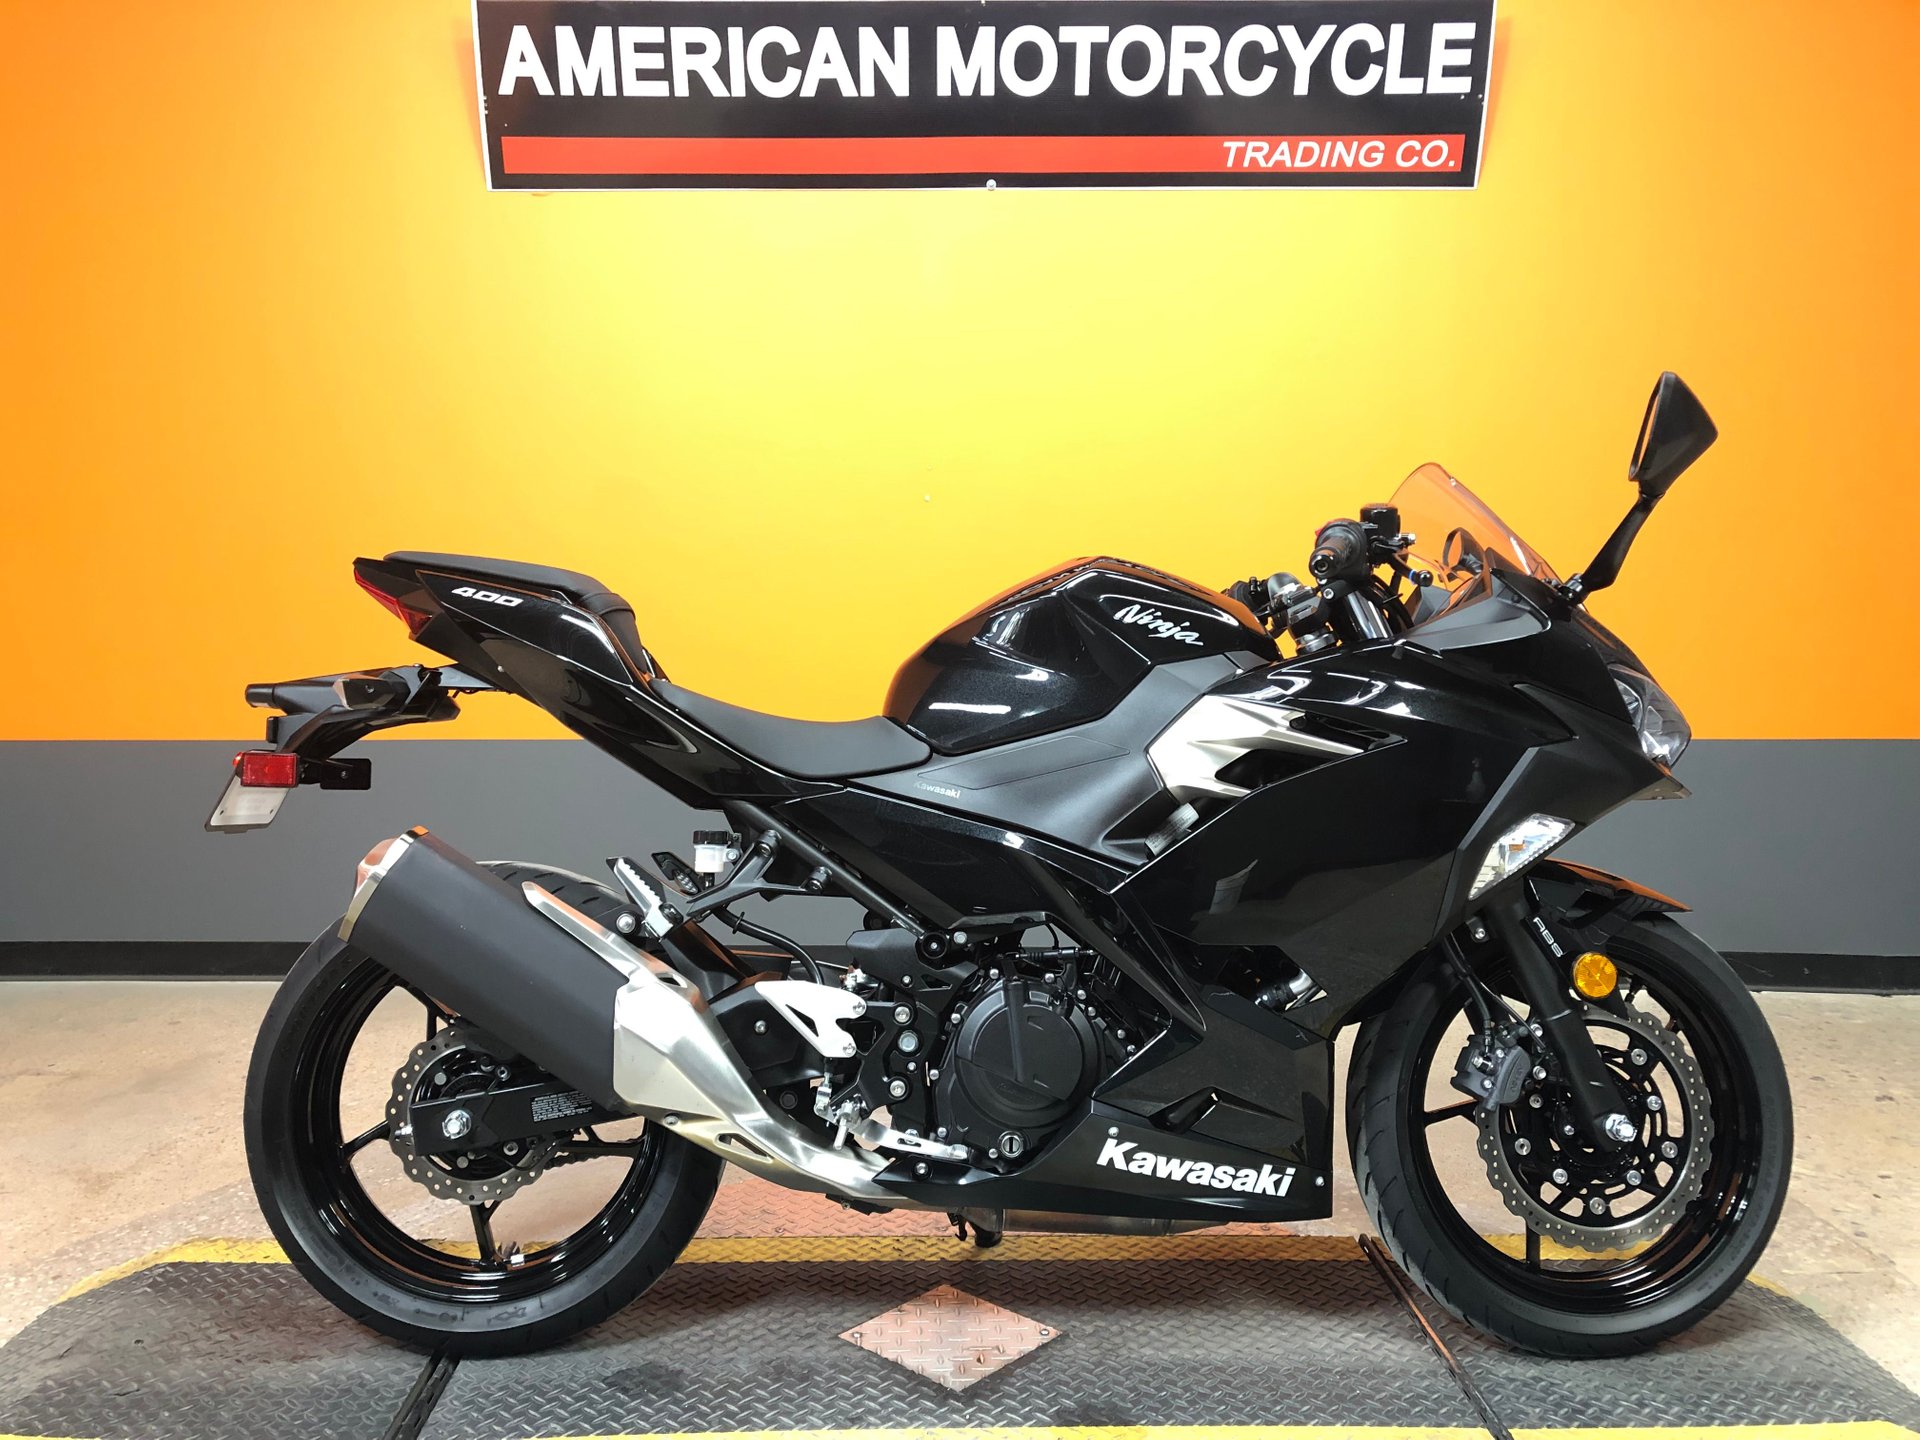 2018 Kawasaki Ninja | American Motorcycle Trading Company - Used Harley ...